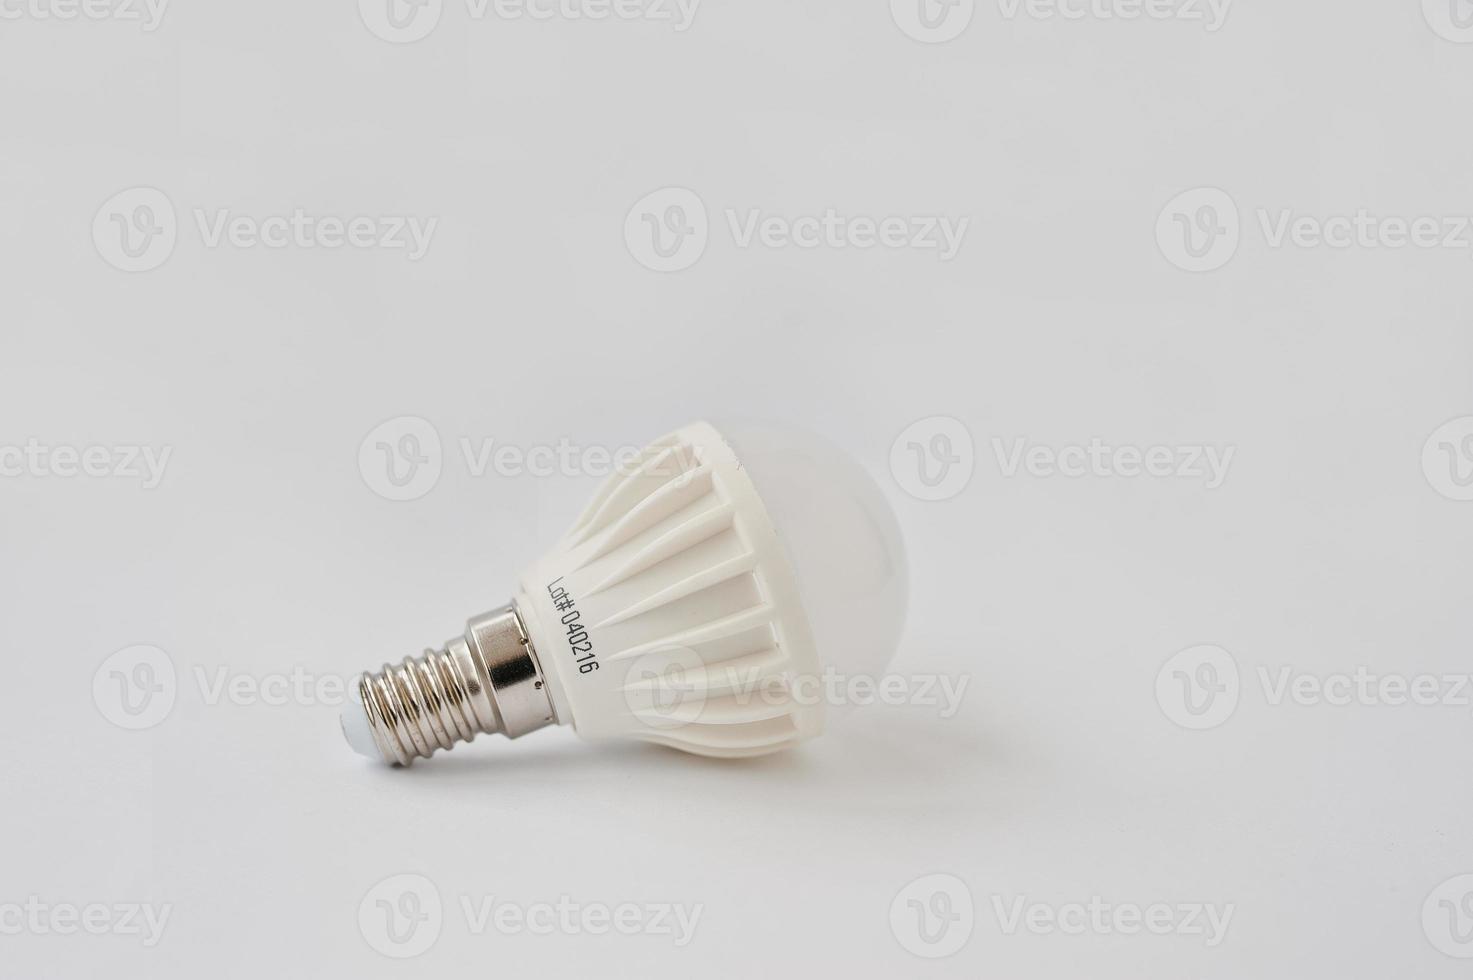 led-lampa 60 v 6 watt e14 på vit bakgrund. foto